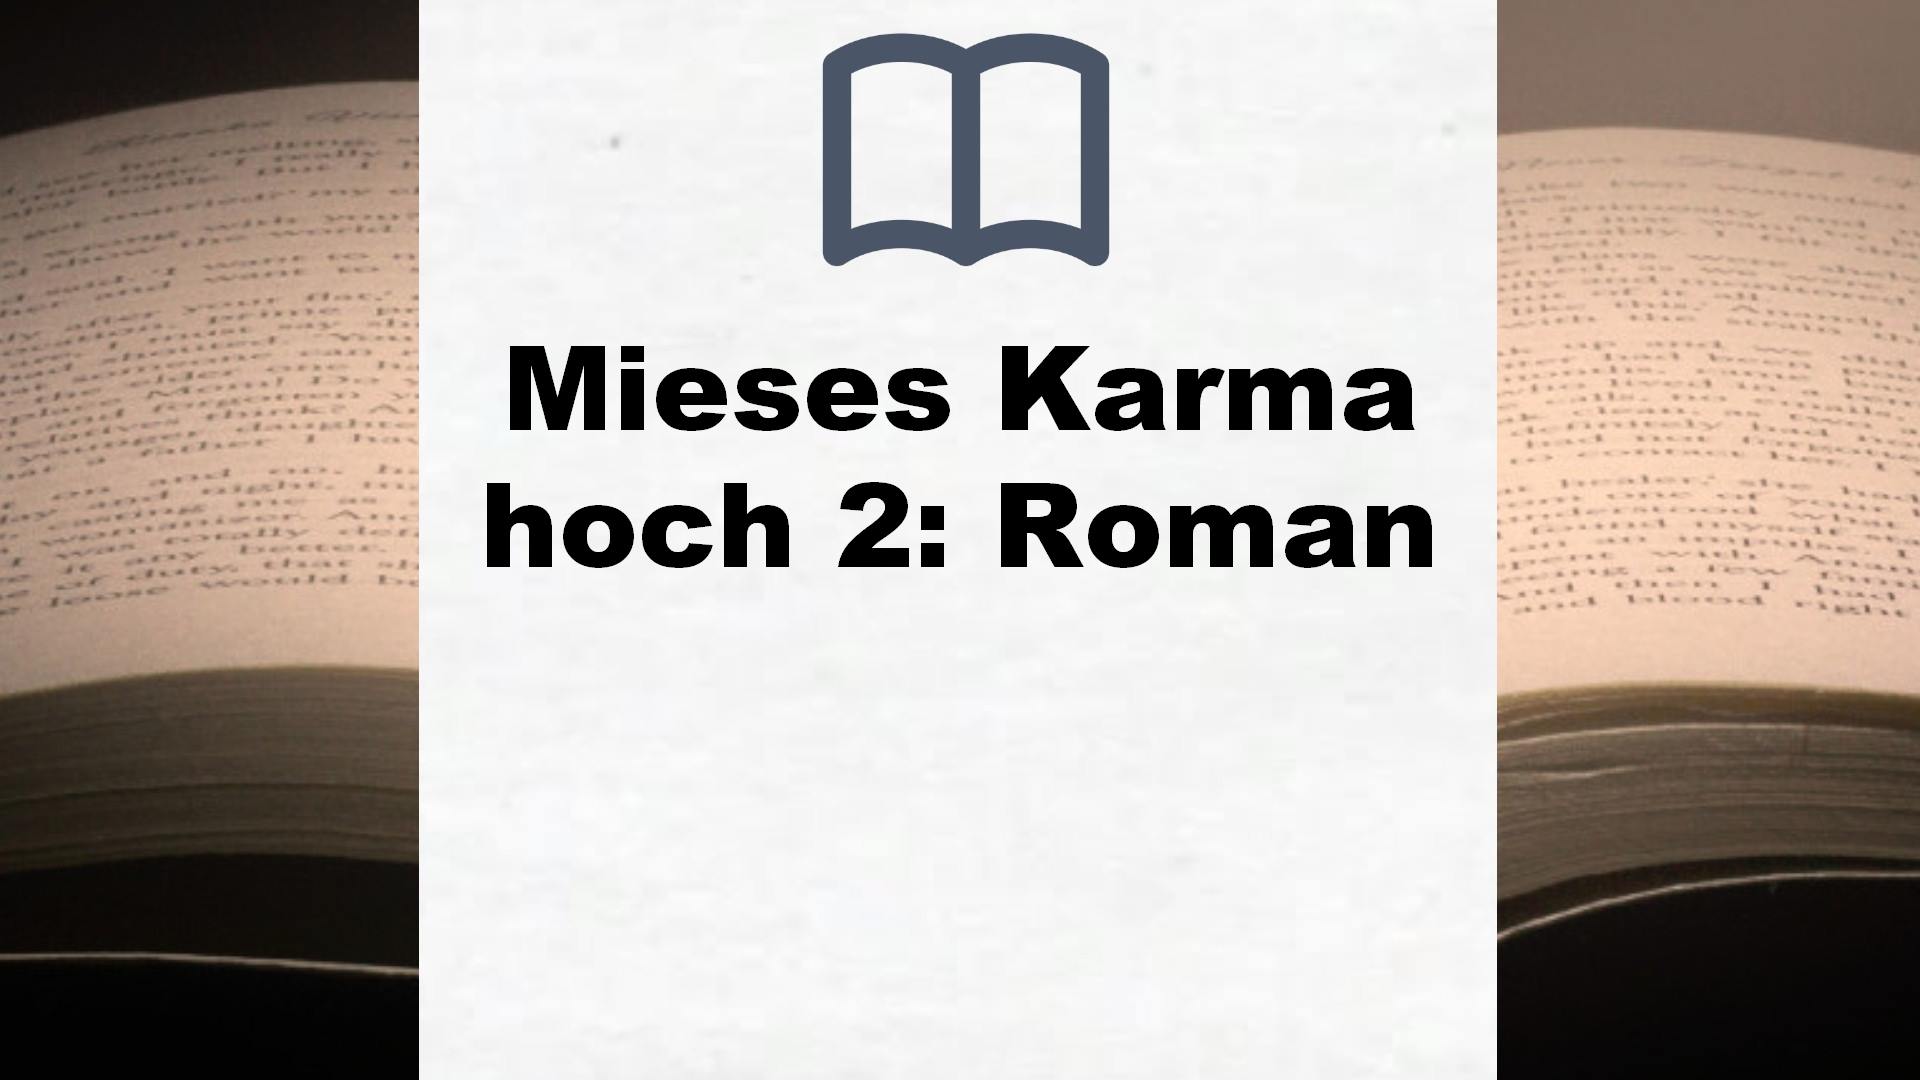 Mieses Karma hoch 2: Roman – Buchrezension